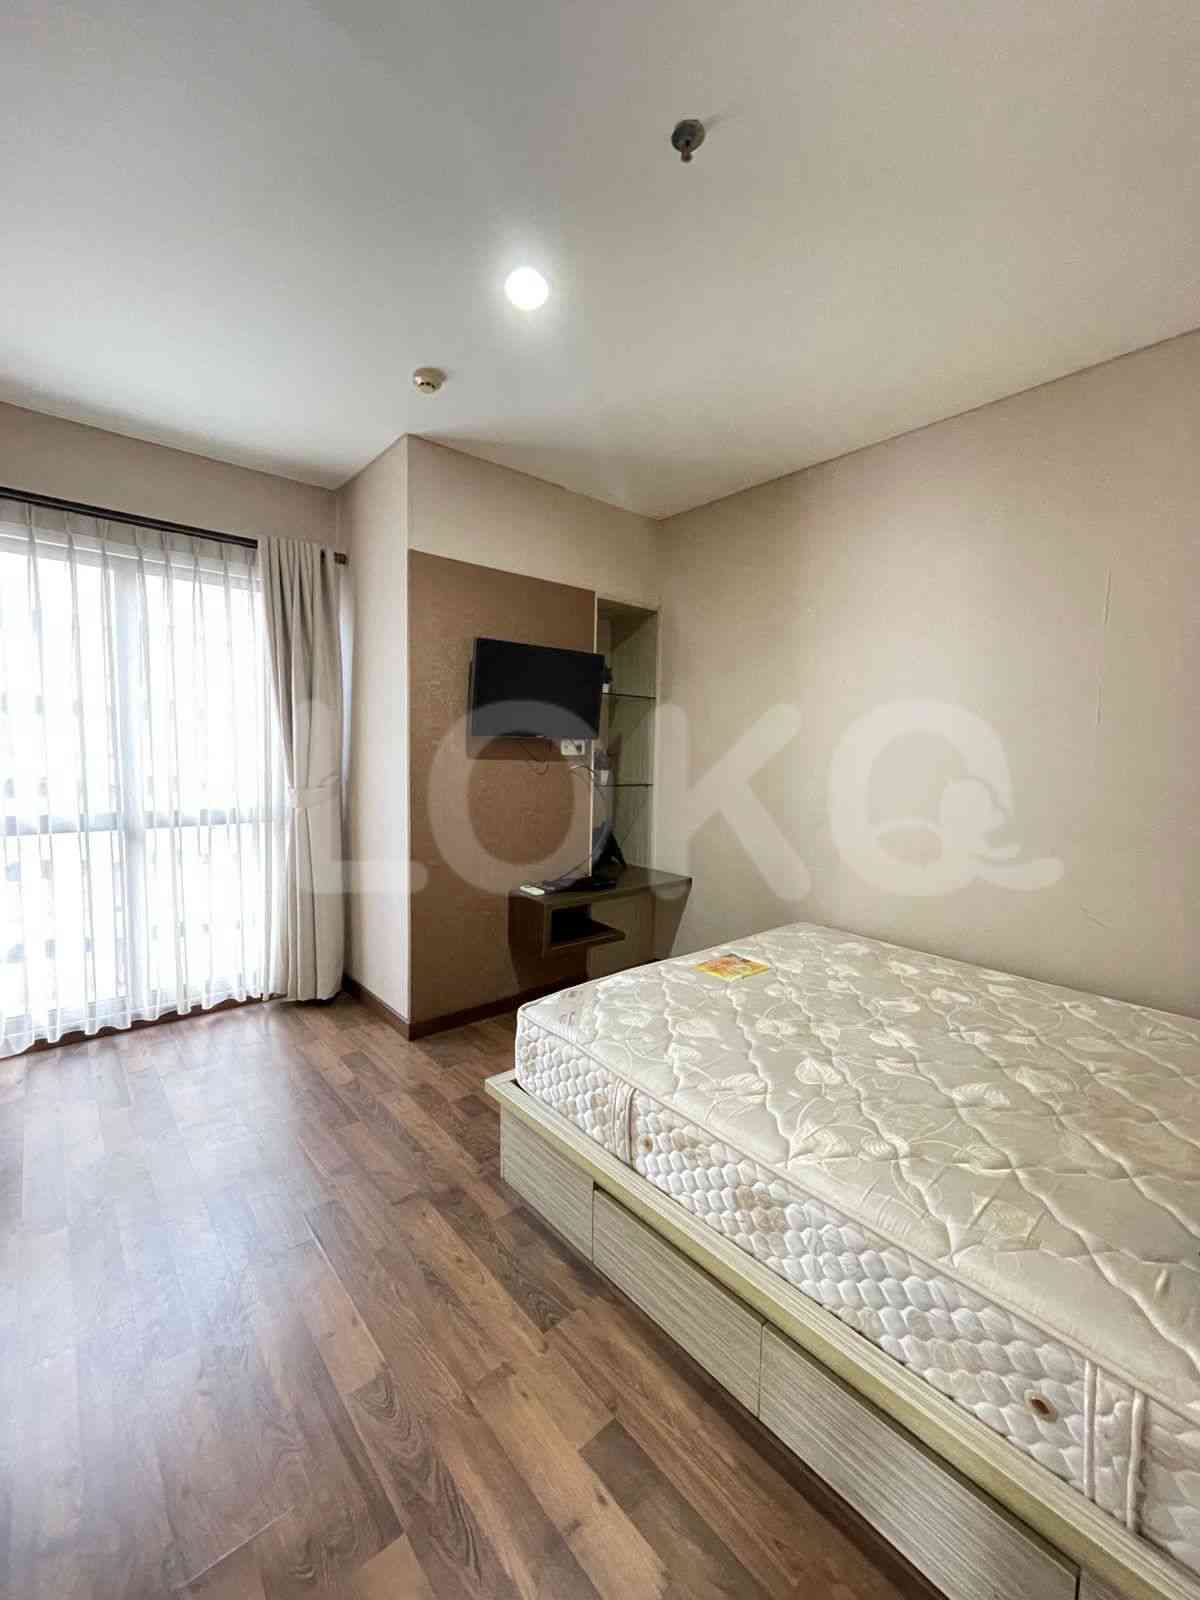 2 Bedroom on 8th Floor for Rent in Tamansari Semanggi Apartment - fsu124 2